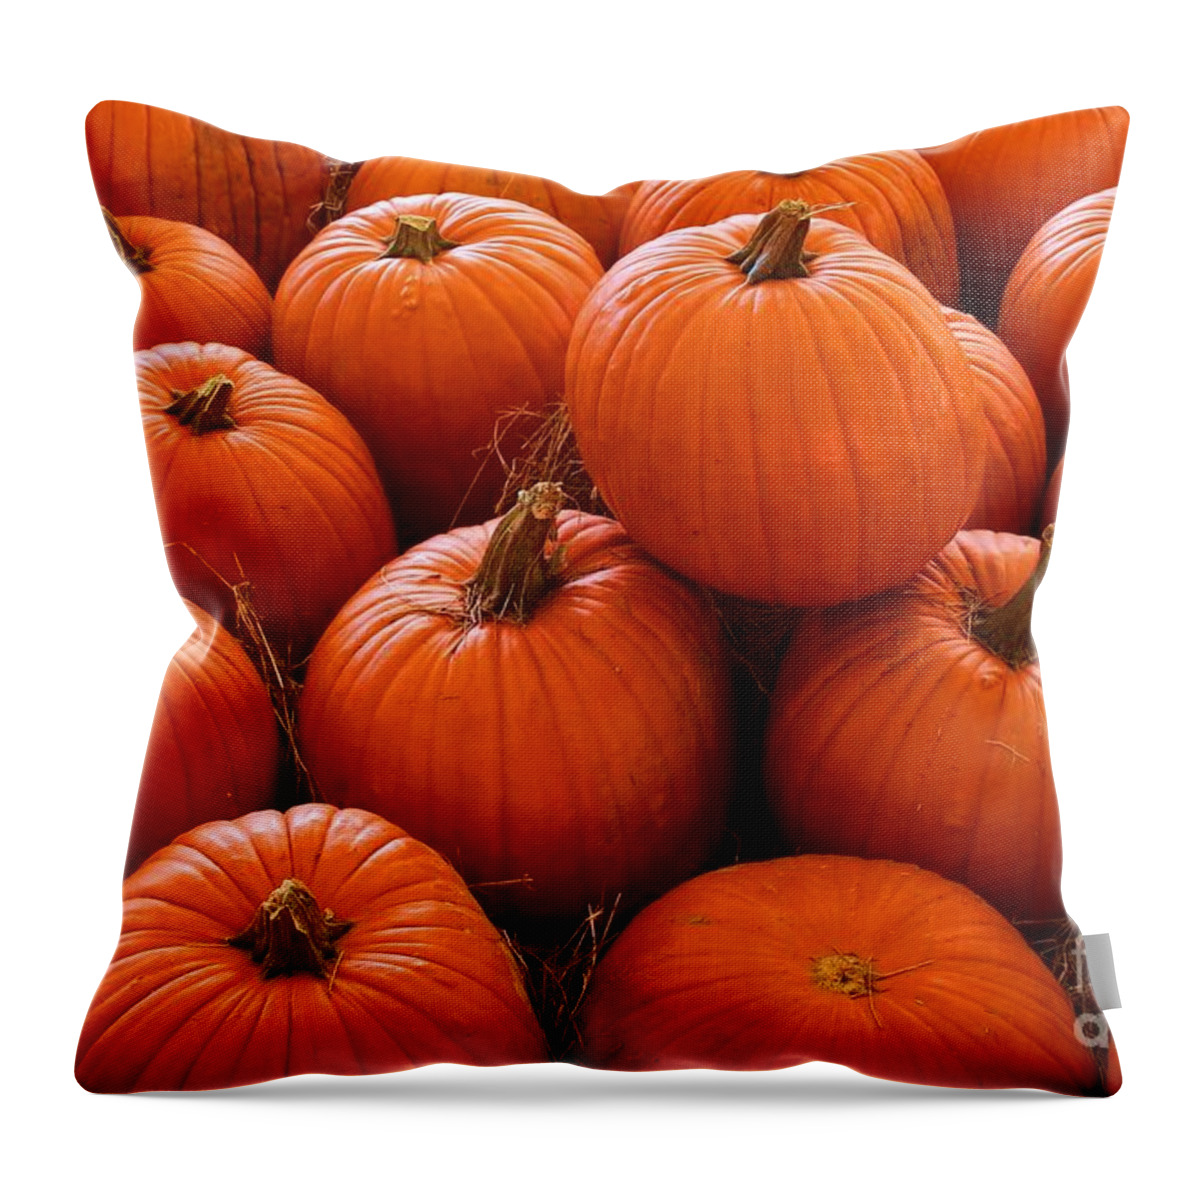 Photo For Sale Throw Pillow featuring the photograph Pumpkin Parch 3 by Robert Wilder Jr